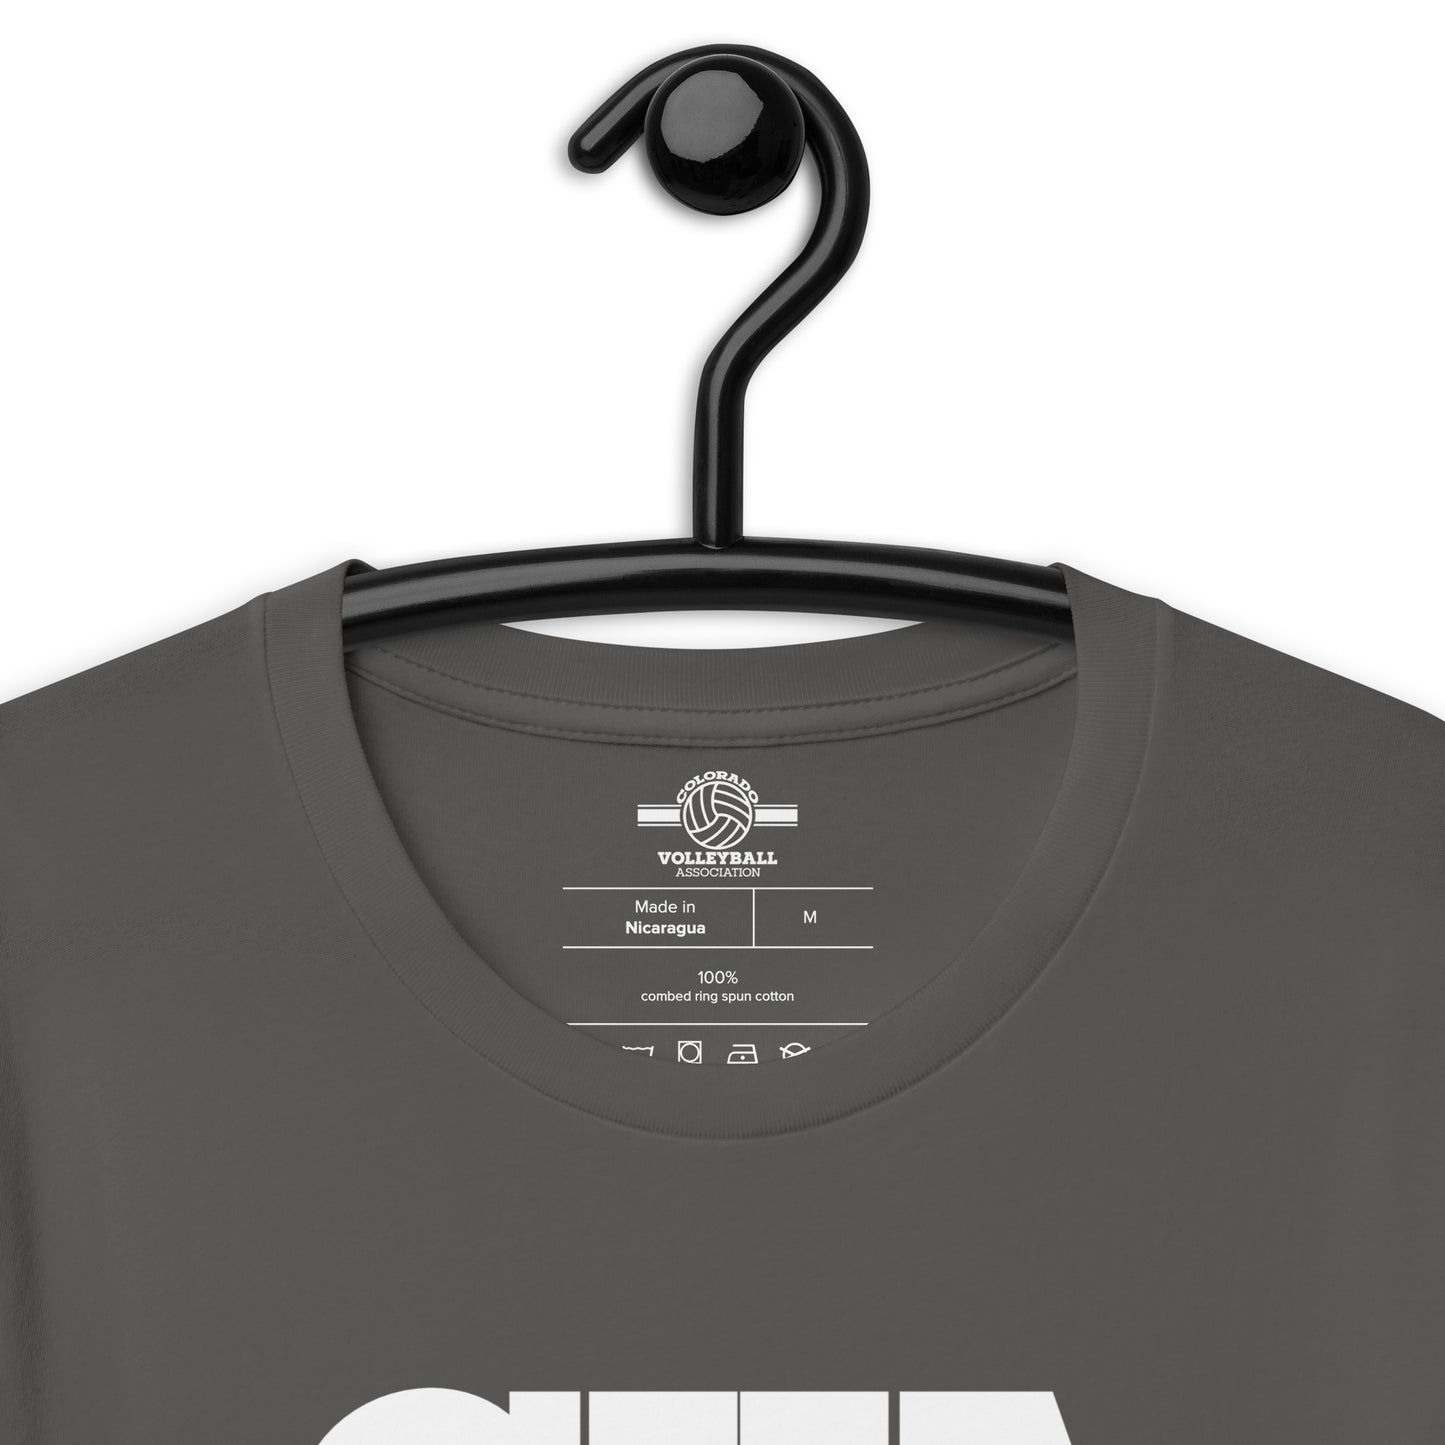 Unisex Short Sleeve T-Shirt: Large CVA Logo - Multiple Color Options